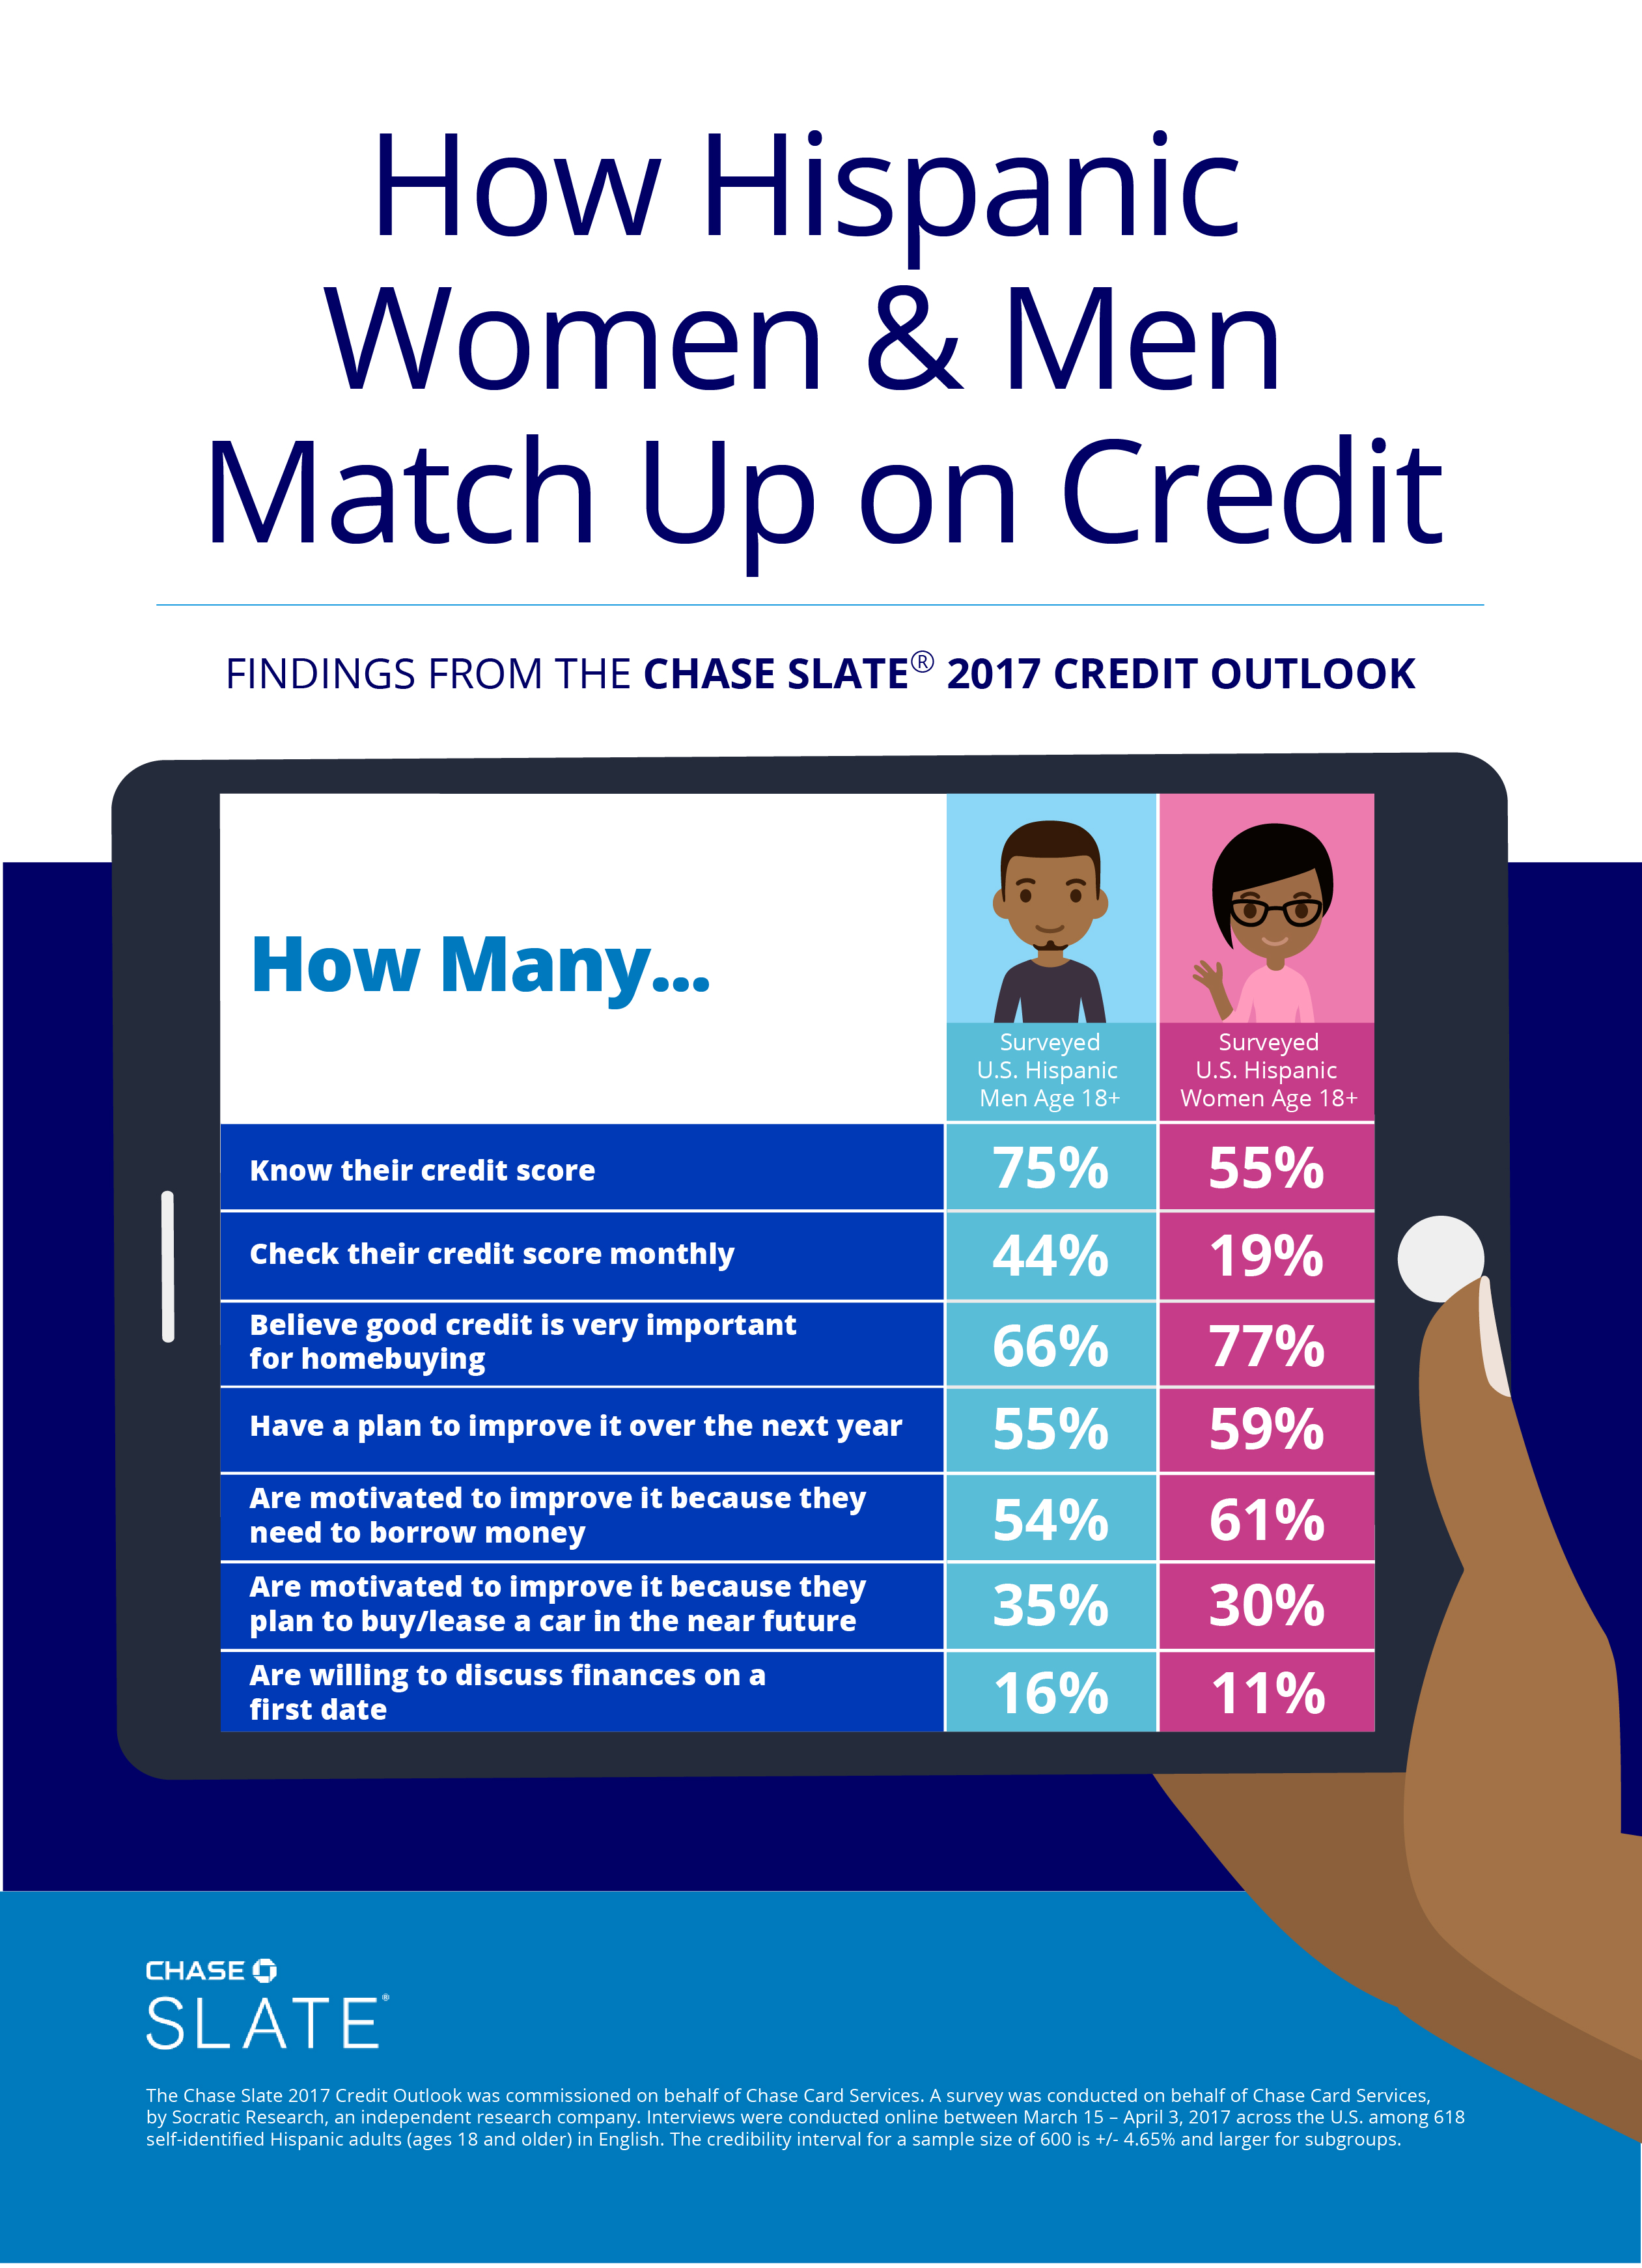 How Hispanic Women & Men Match Up on Credit